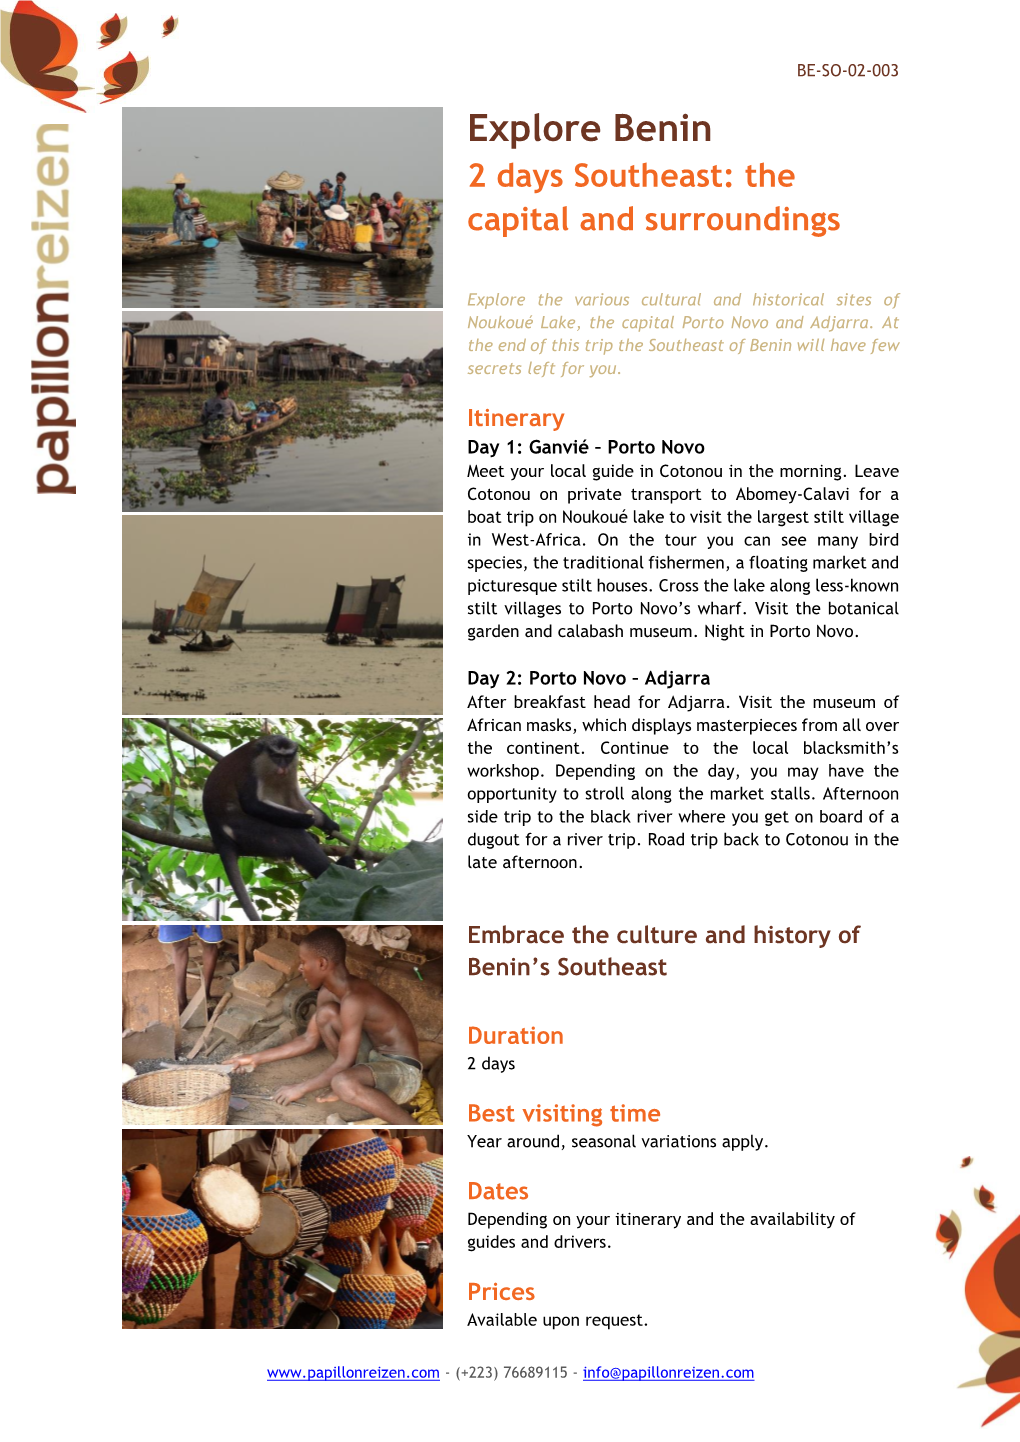 Explore Benin 2 Days Southeast: the Capital and Surroundings